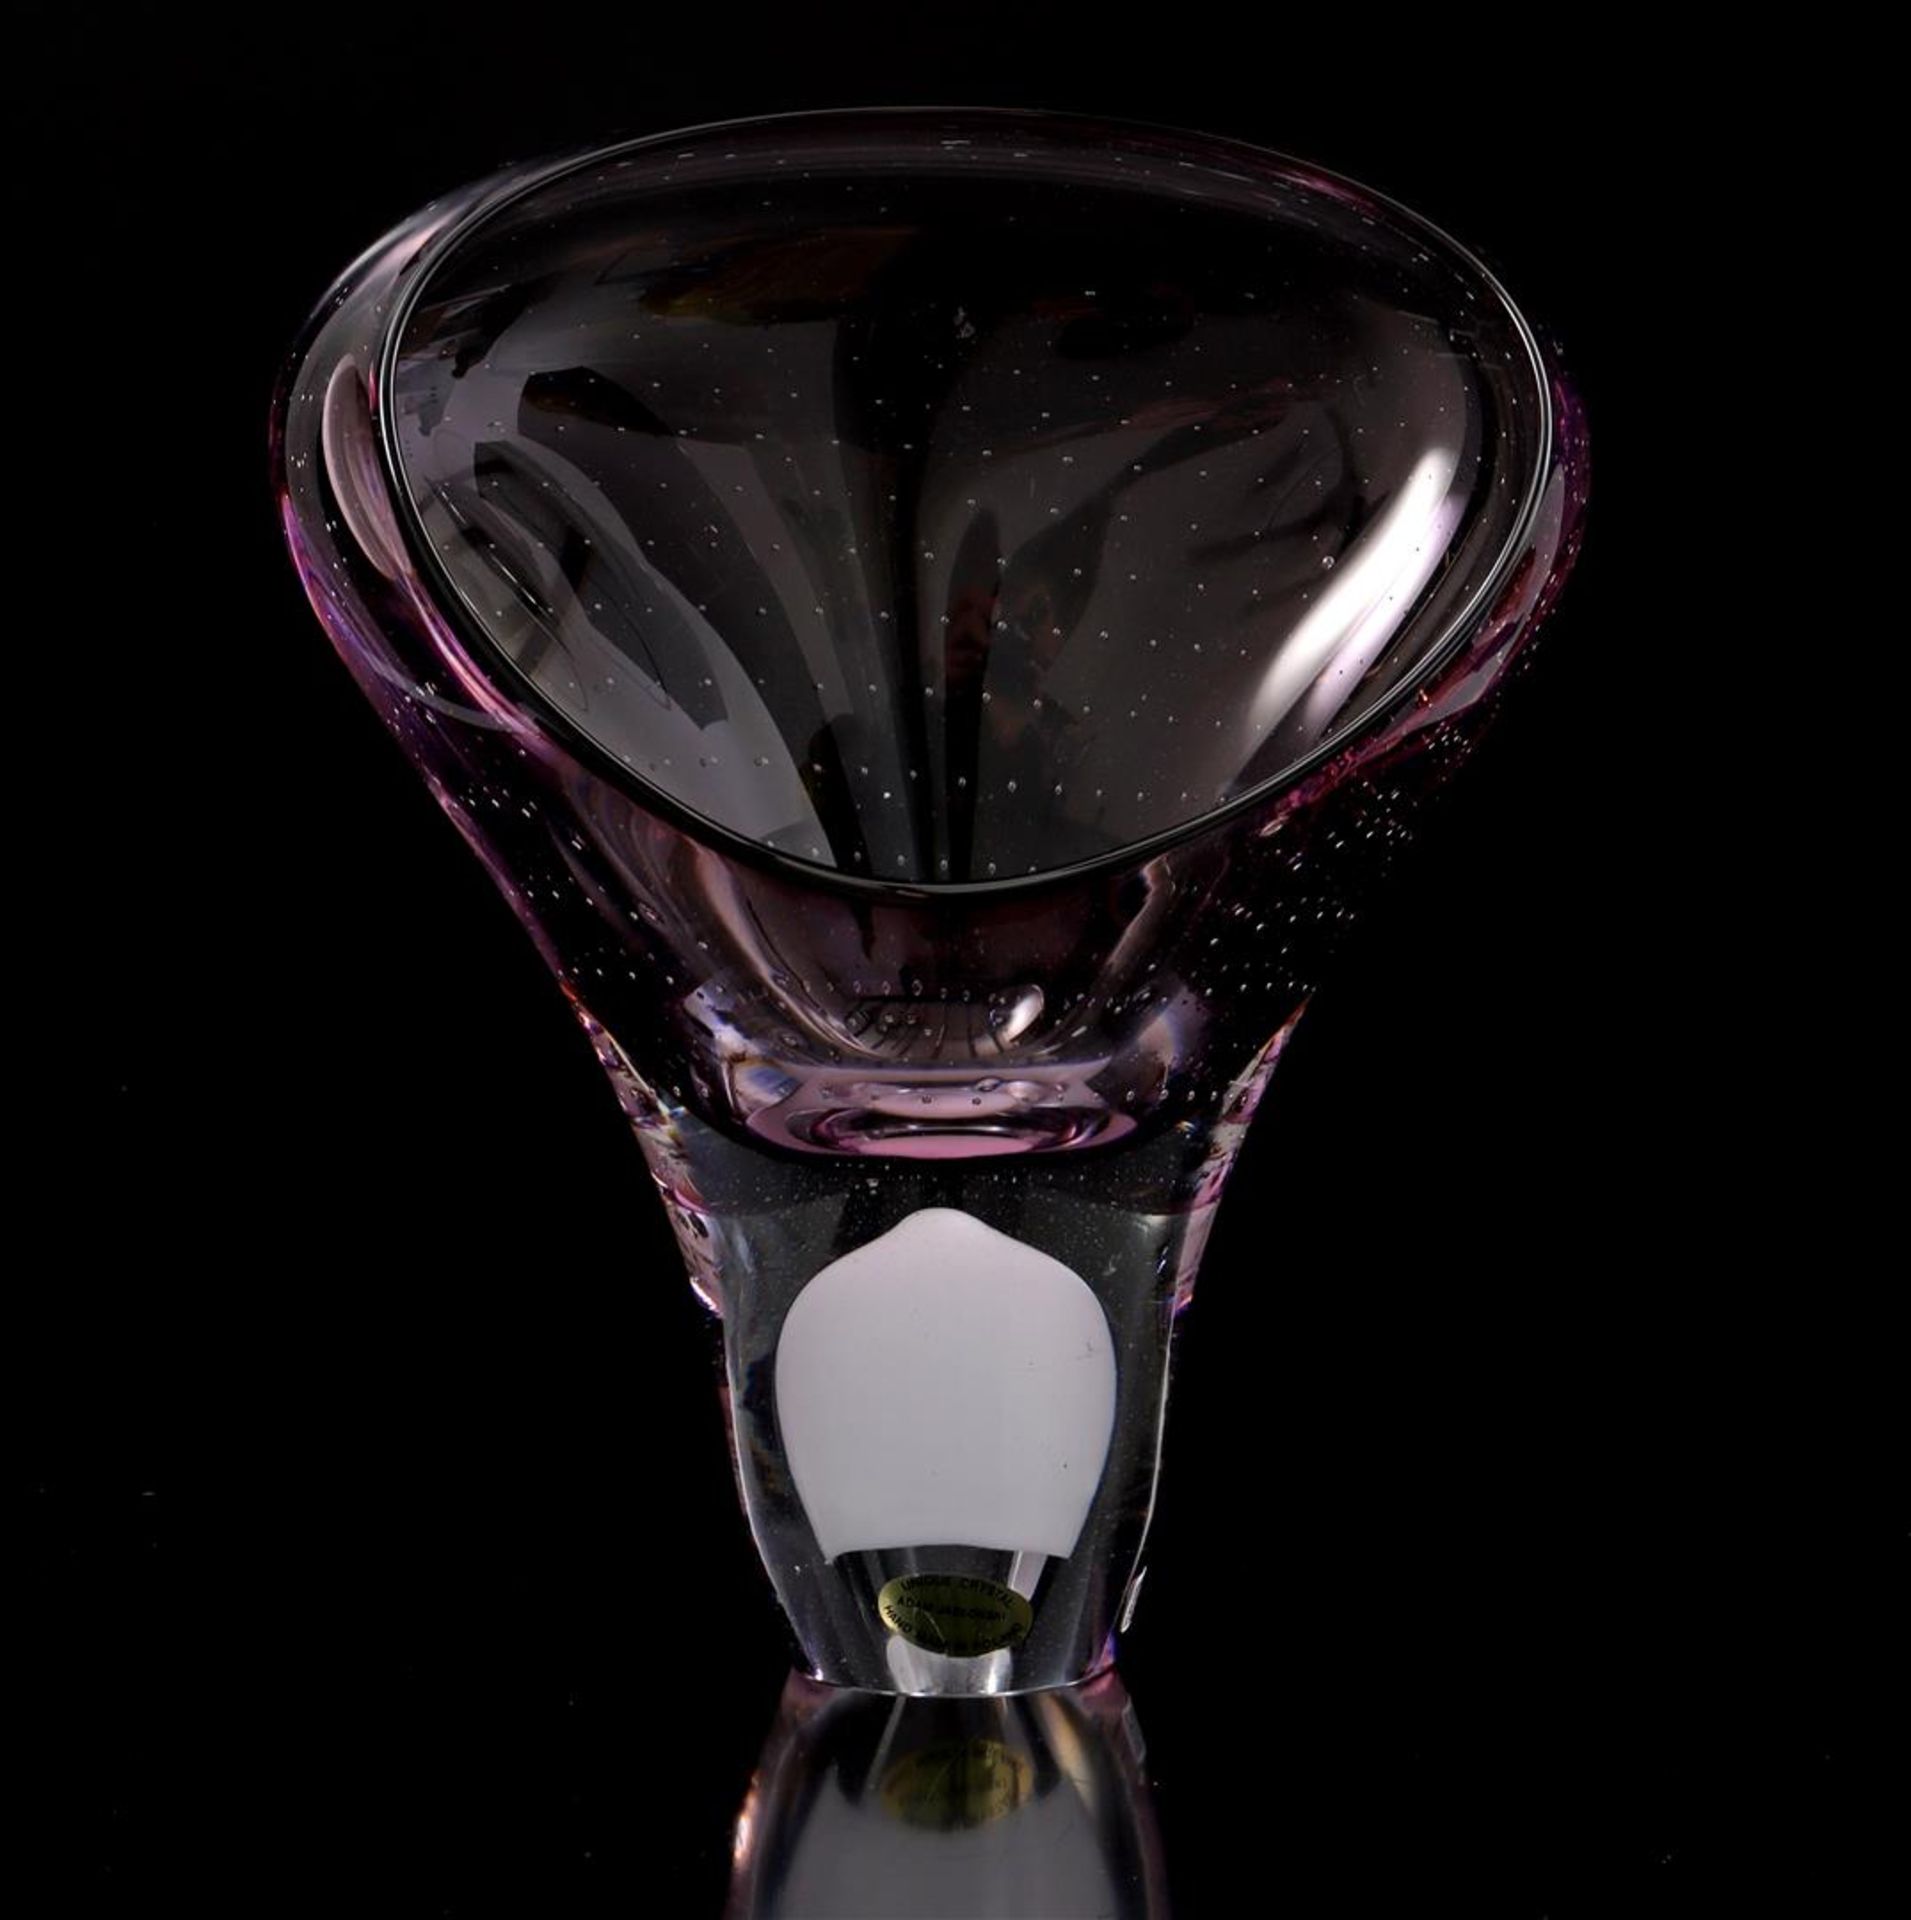 Jablonski purple glass object with bubble motif, dated 1998, 33.5 cm high, 28 cm wide, 12 cm deep